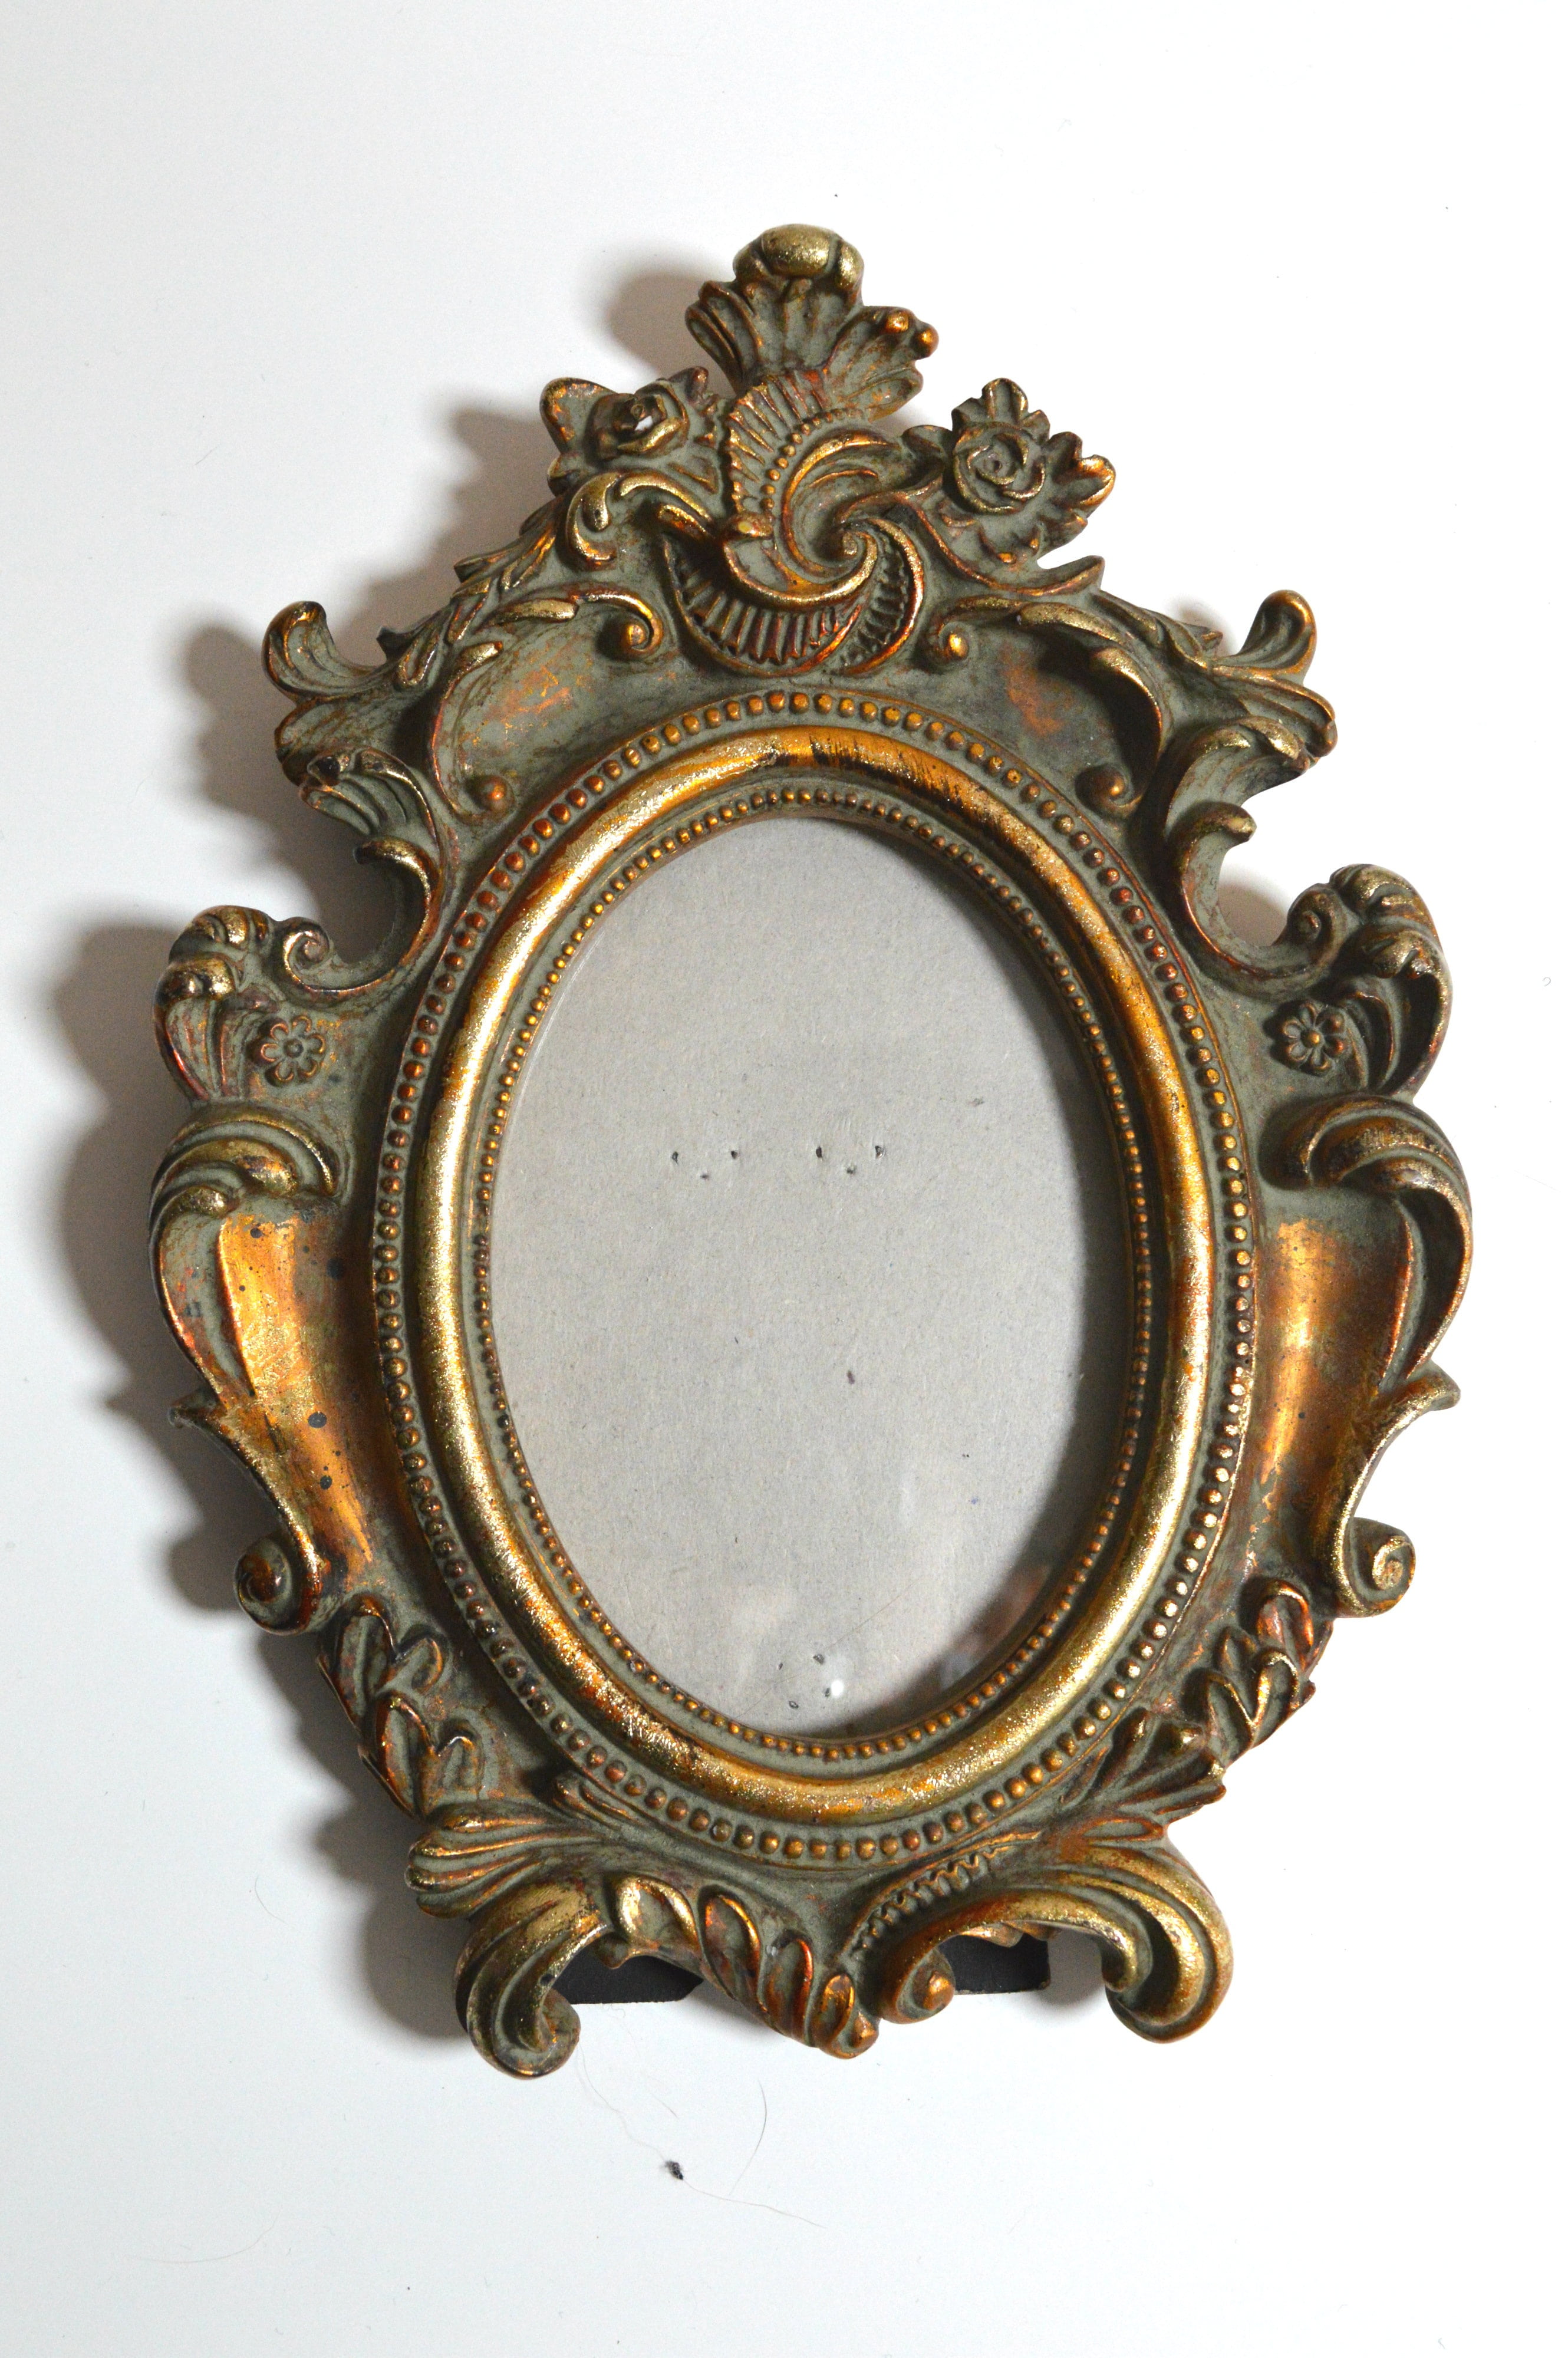 gold photo frame on white surface, baroque, decoration, ornate